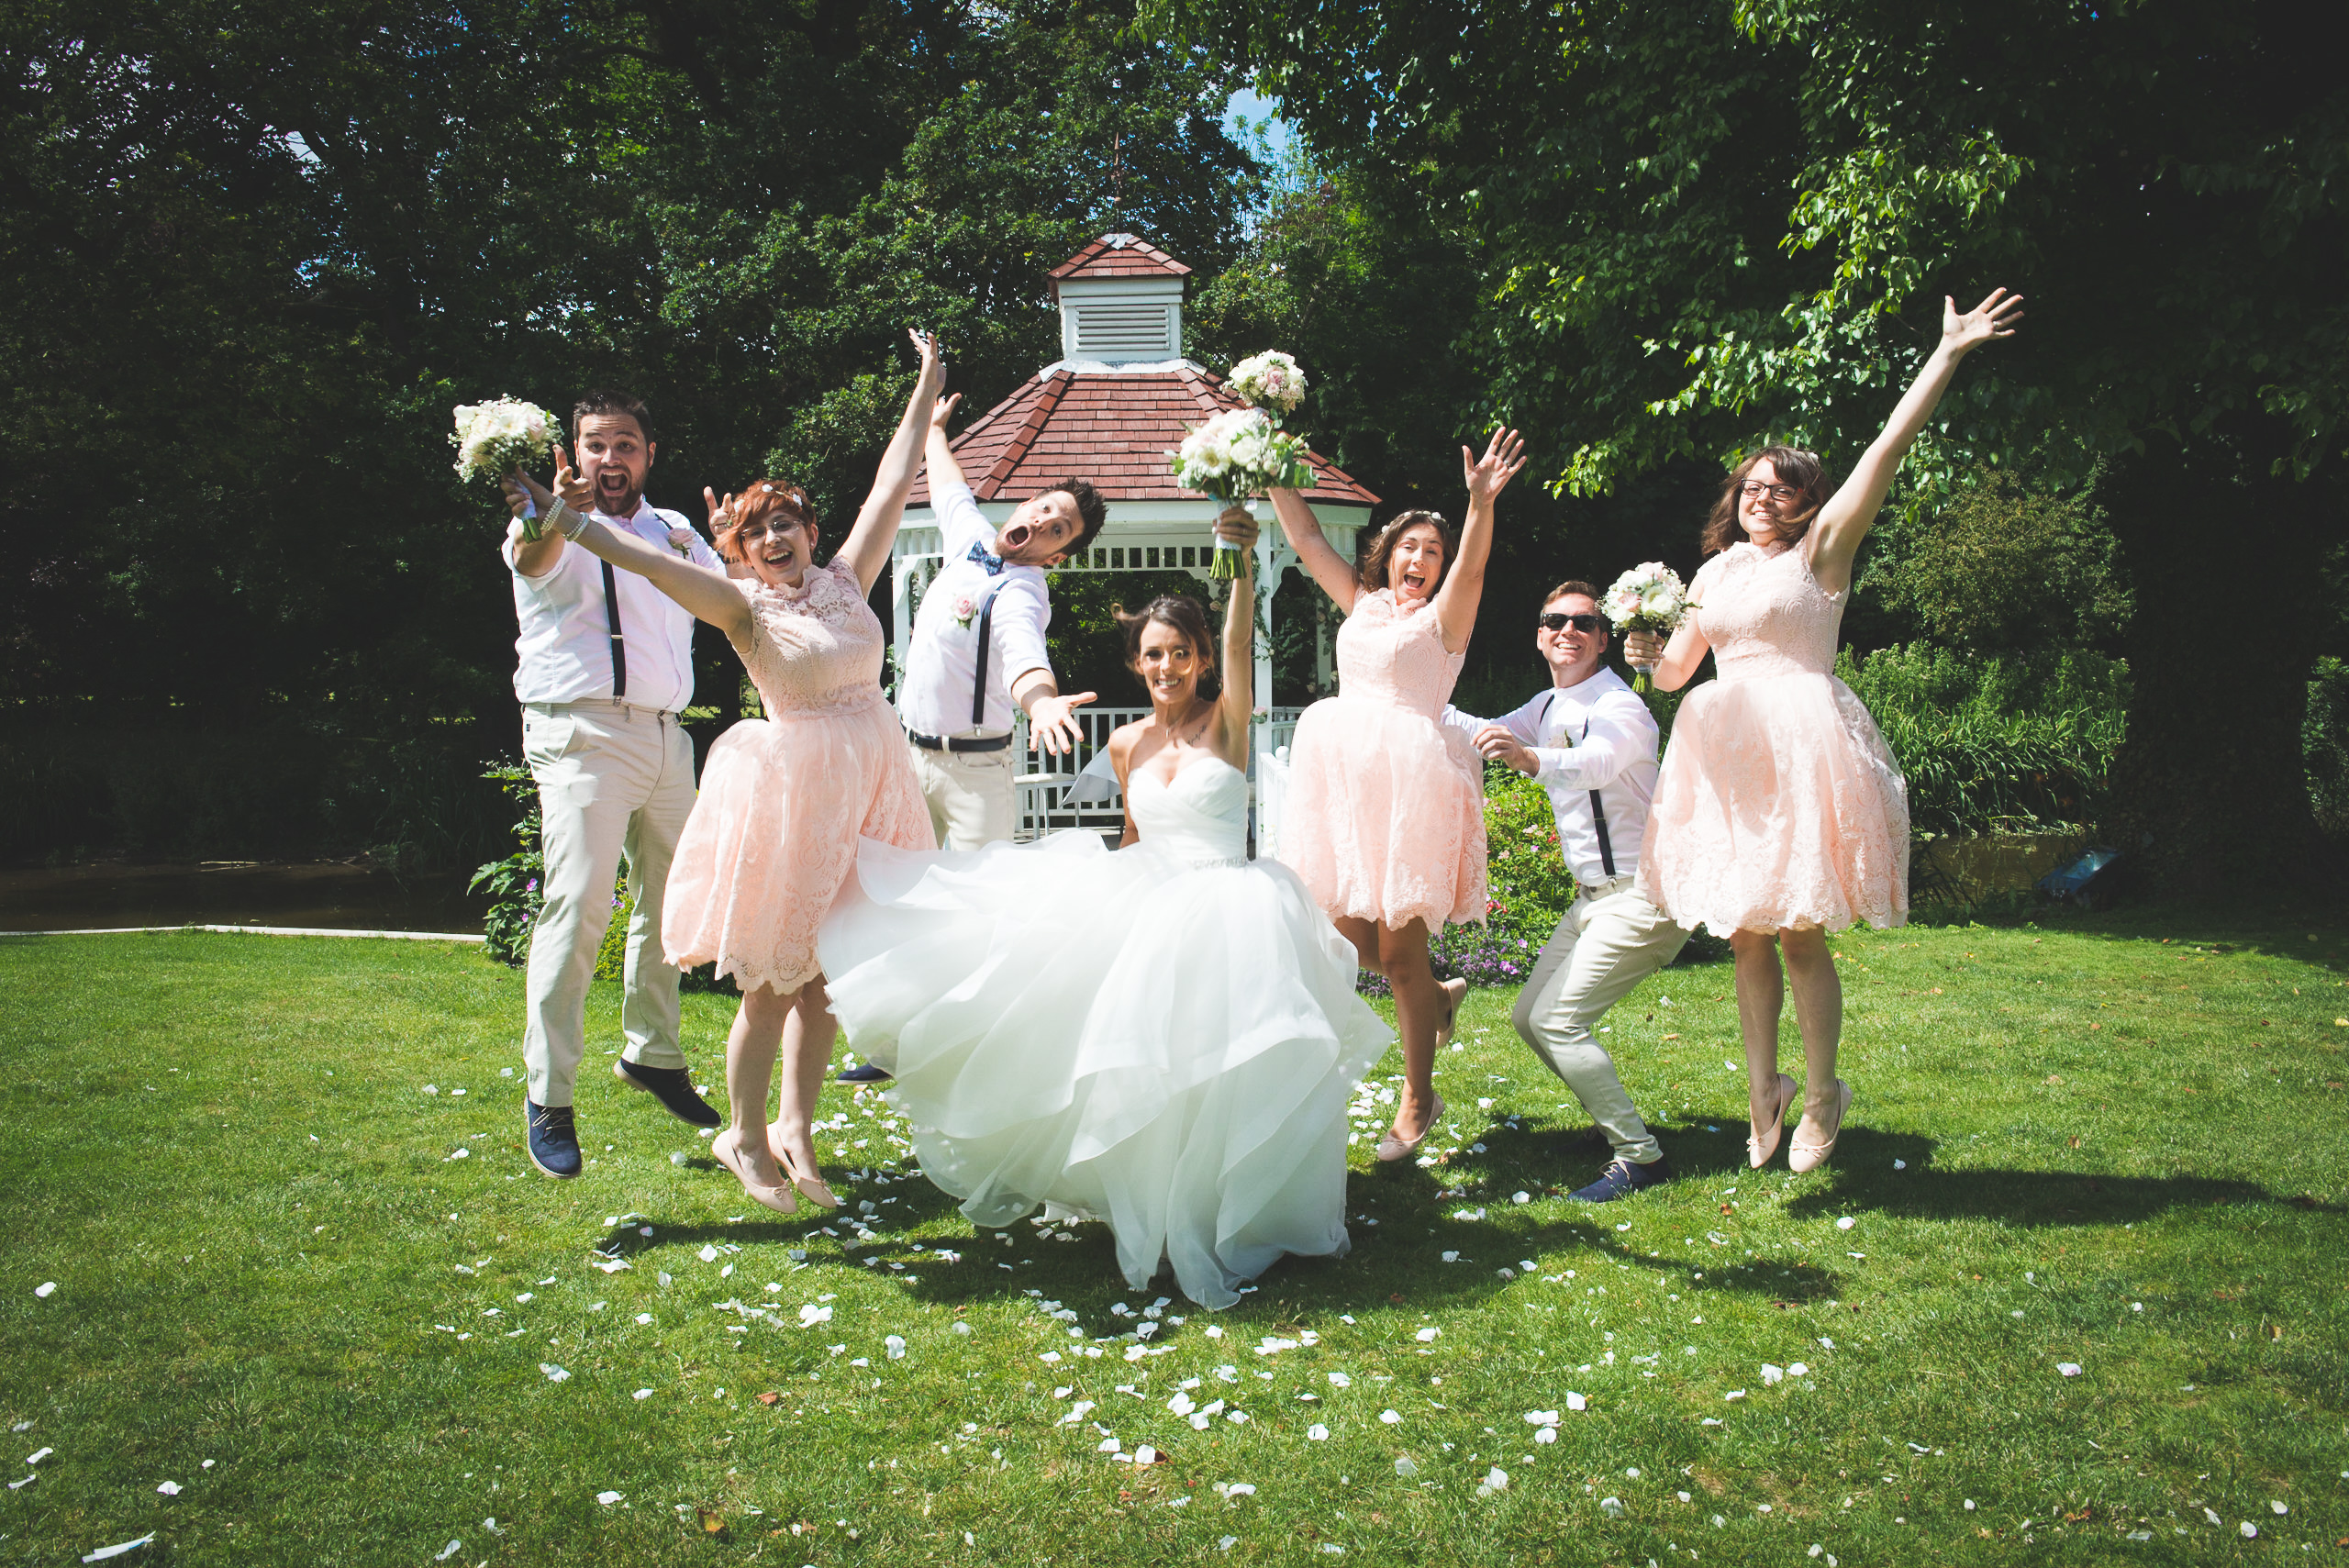 Family photos, group wedding shot, Bridesmaids, wedding photography, sheene mill, disney inspired wedding